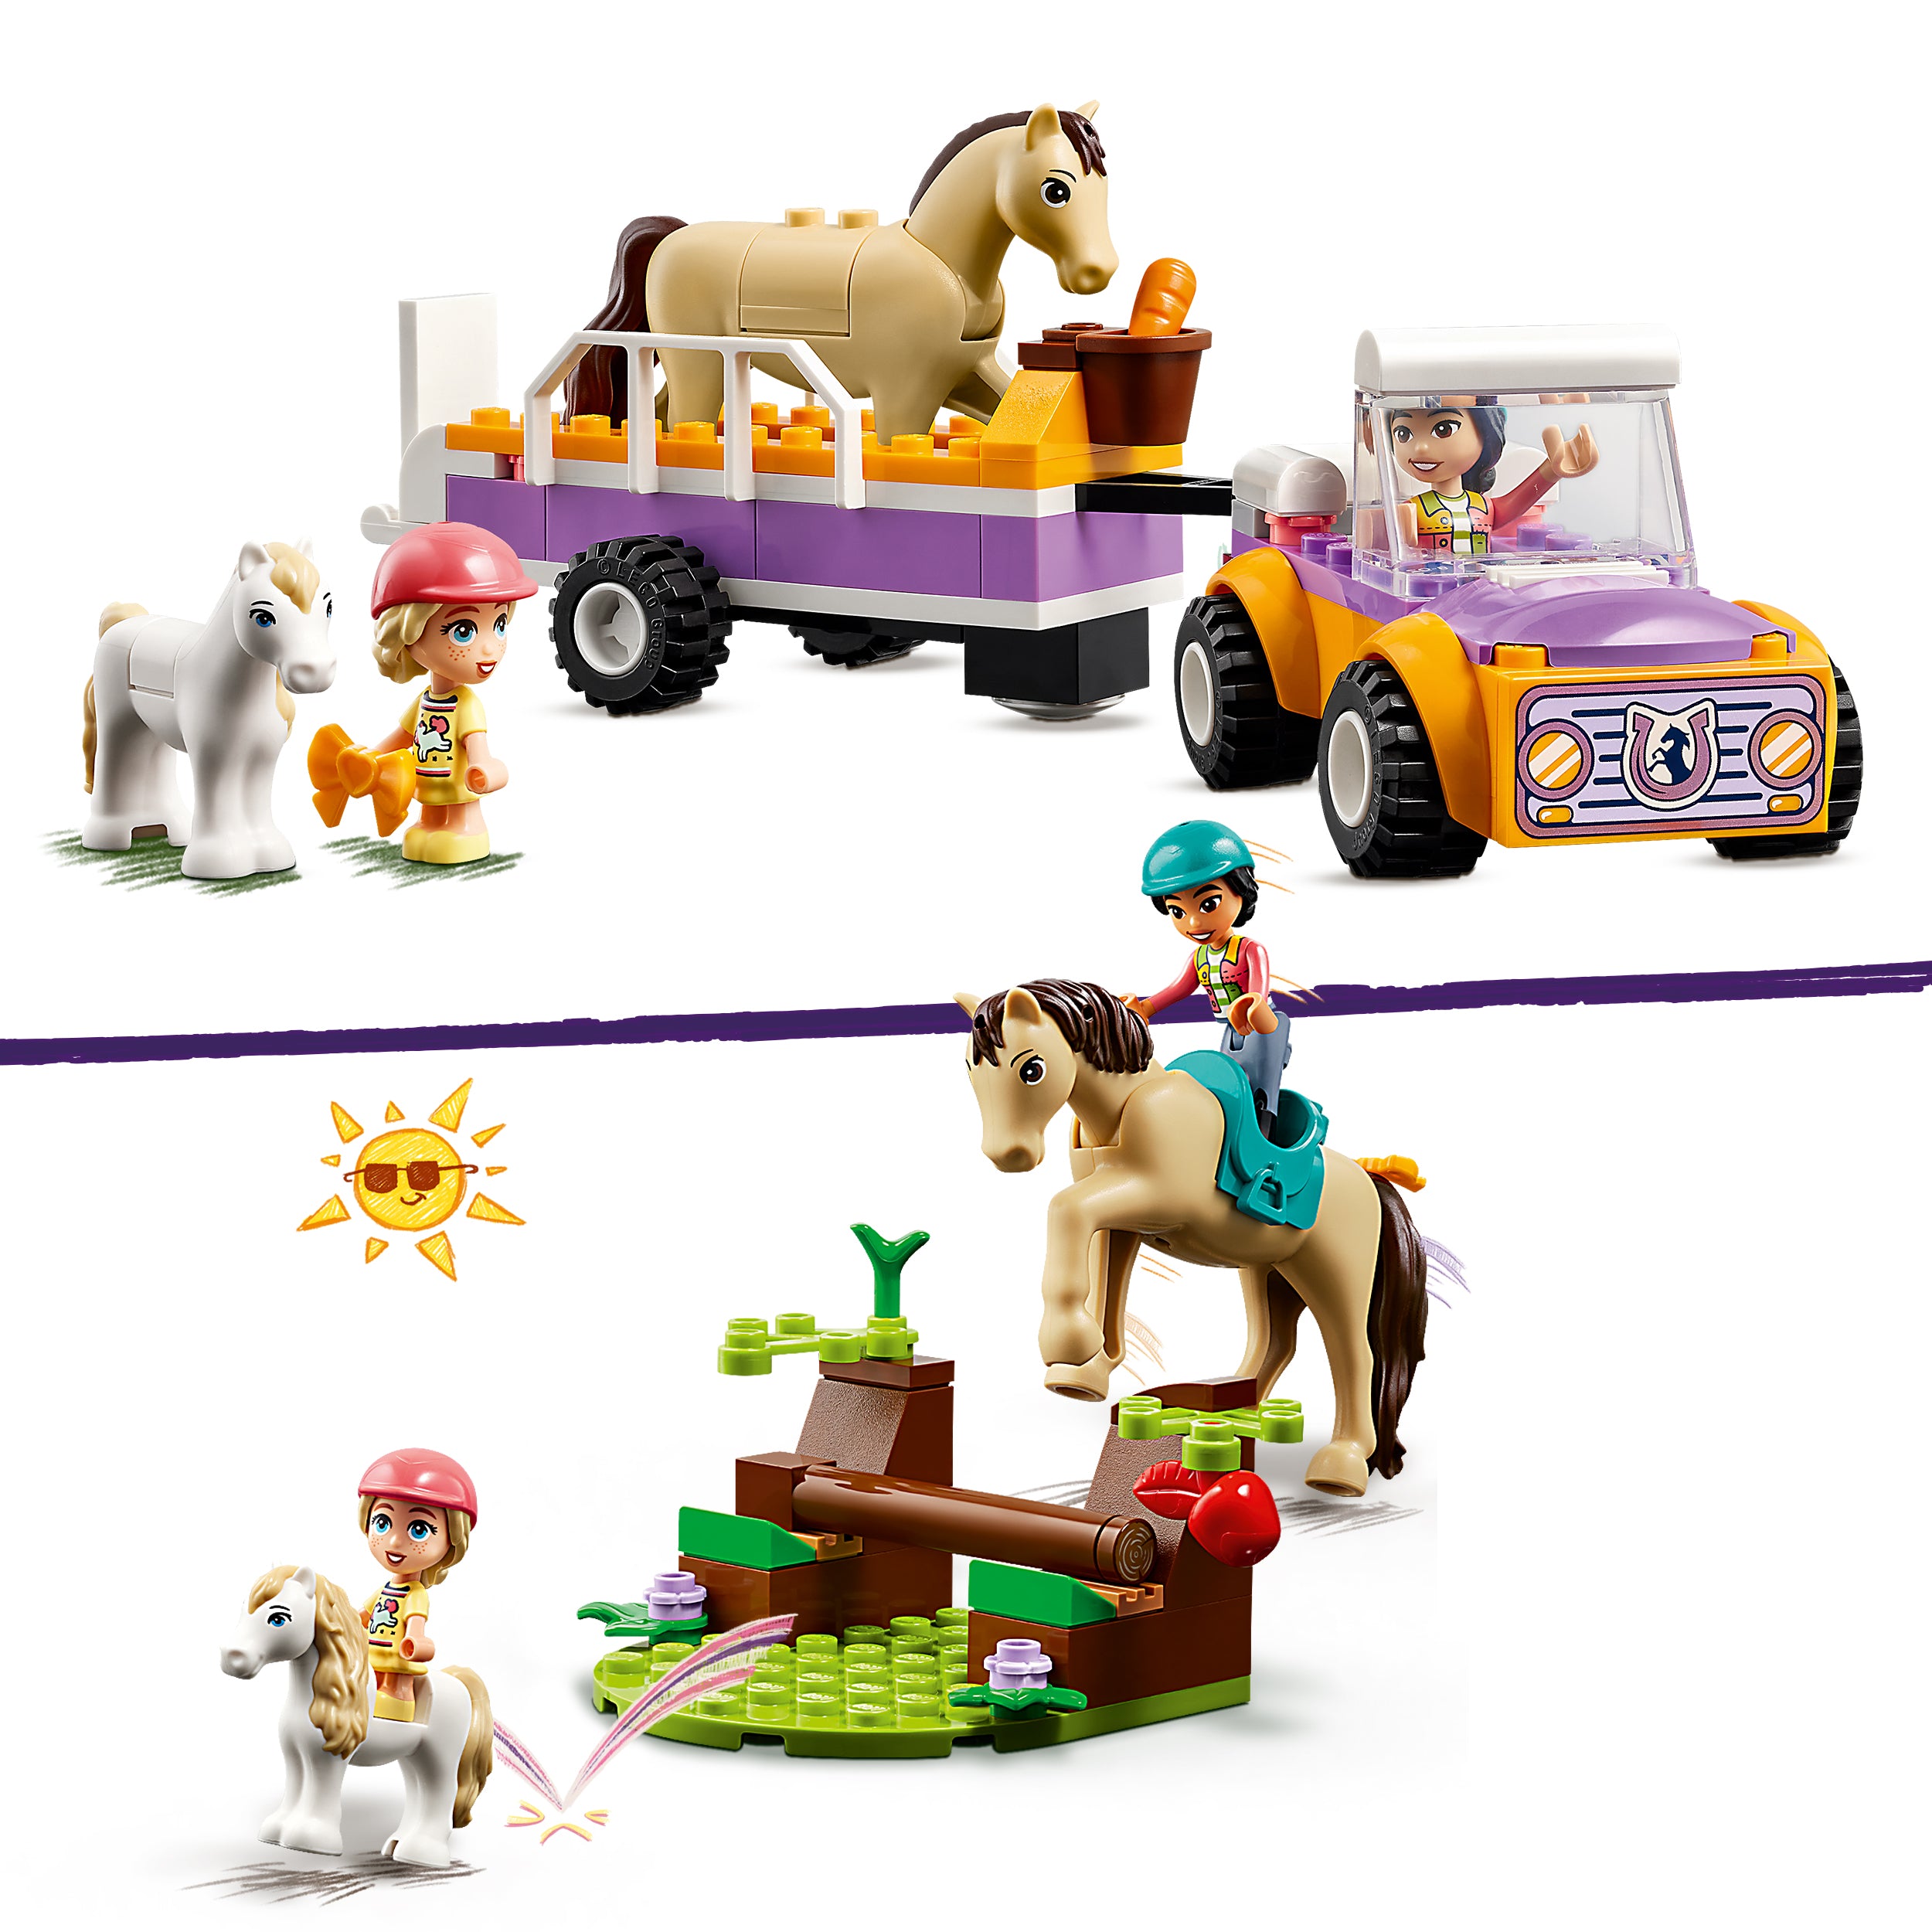 Lego 42634 Horse & Pony Trailer